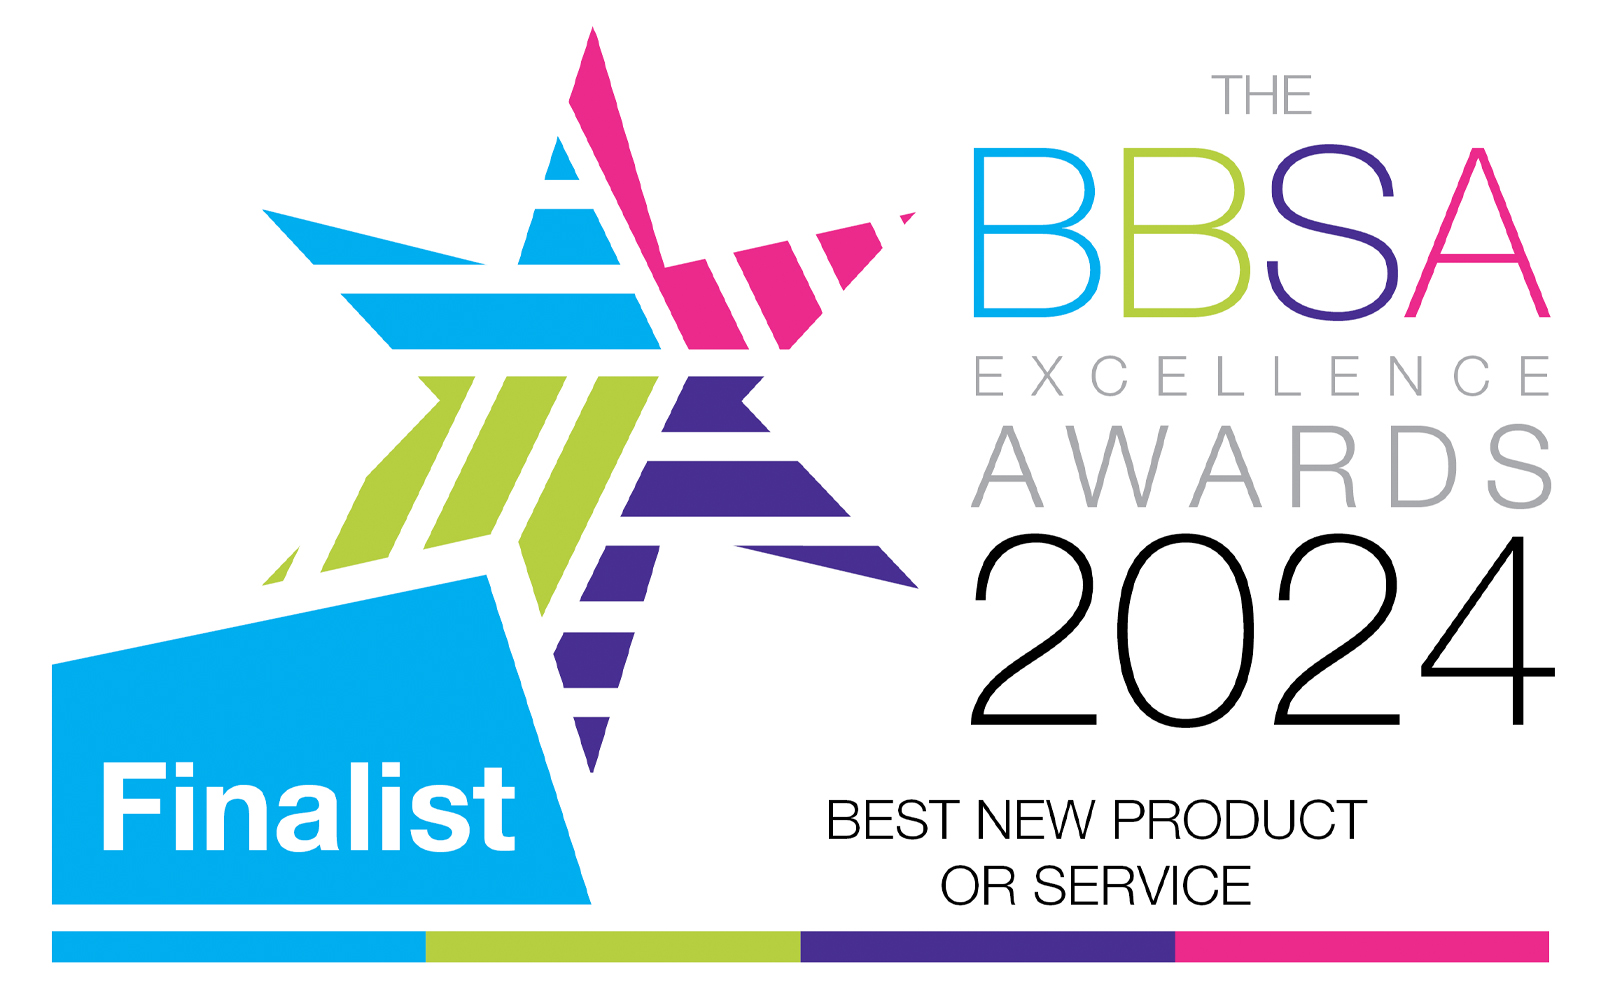 BBSA Excellence Awards